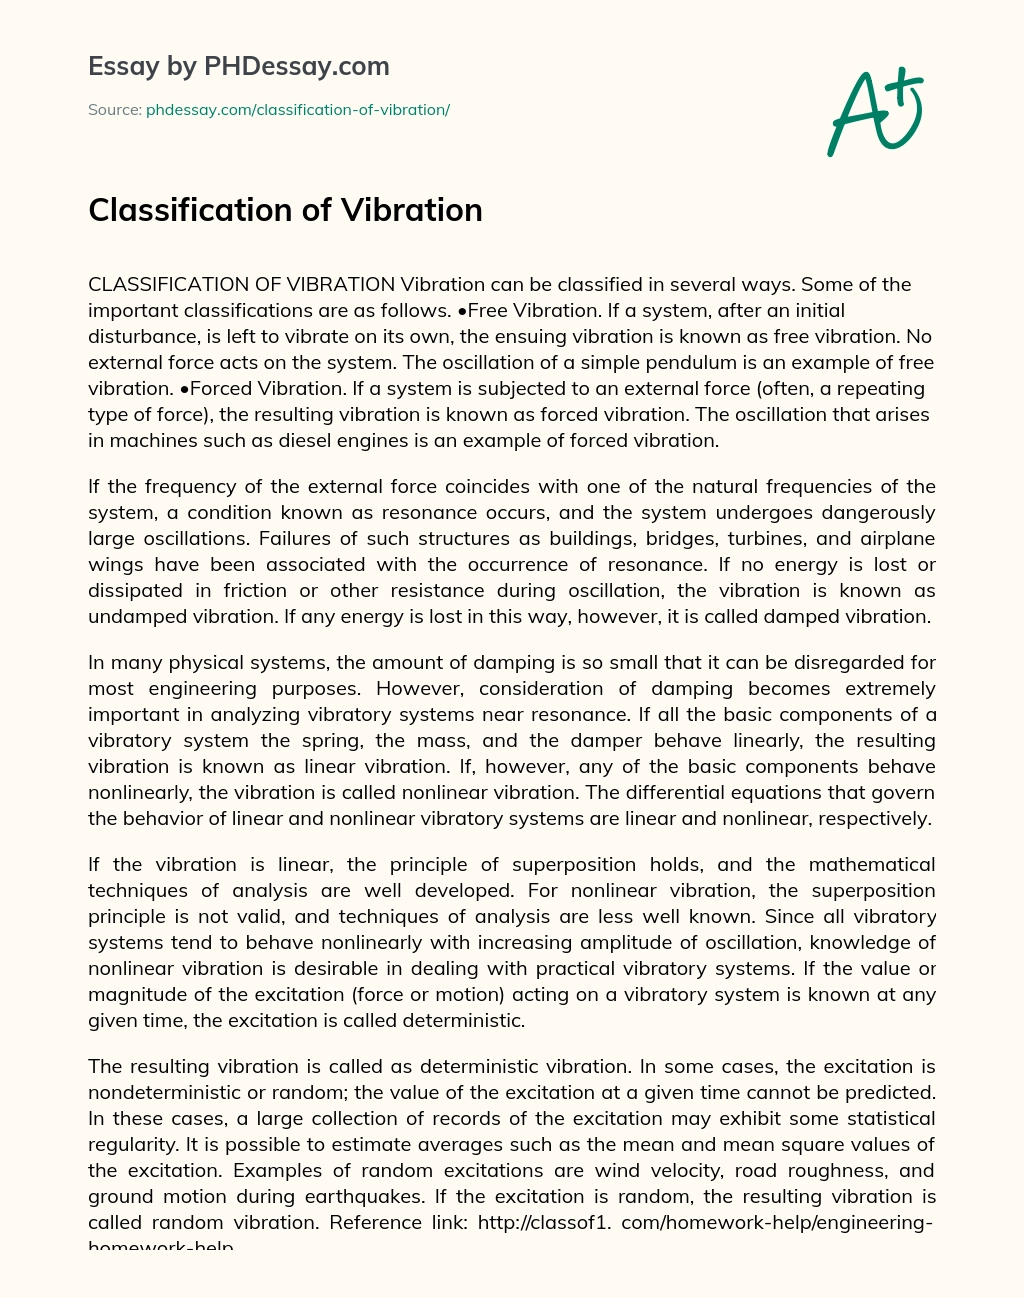 Classification of Vibration